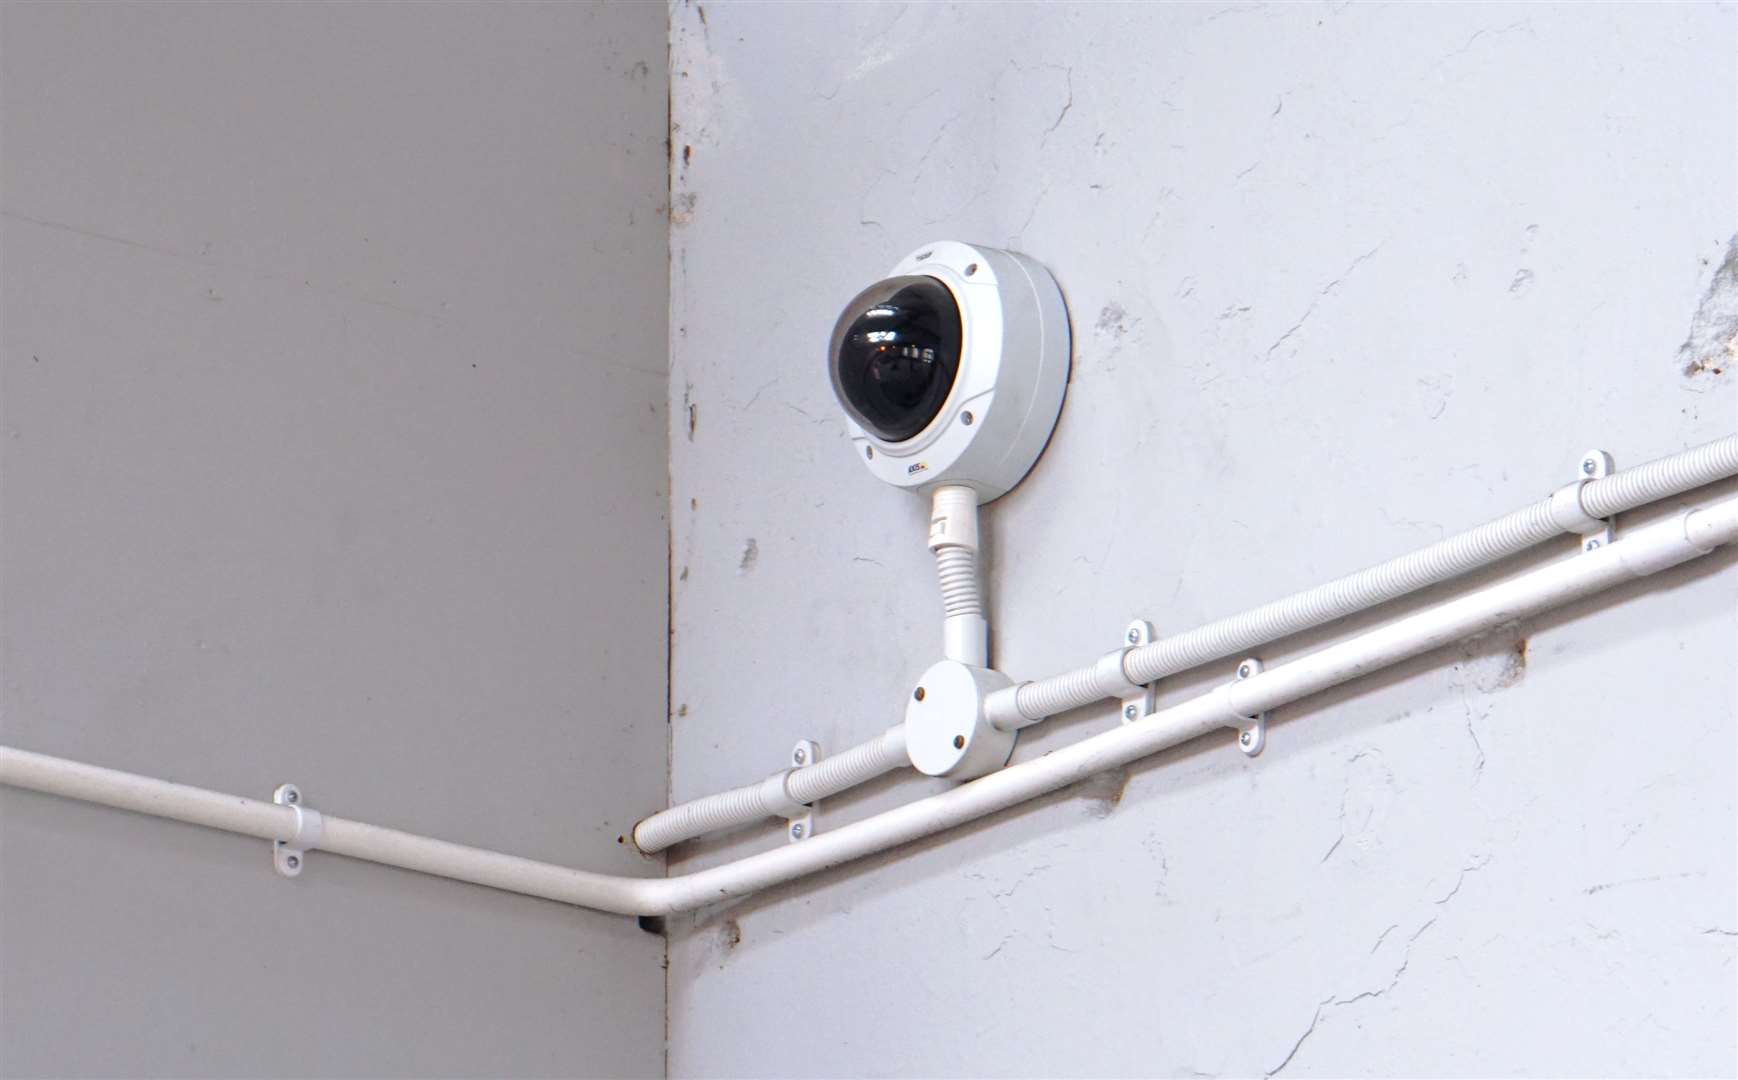 CCTV camera in Wick railway station.